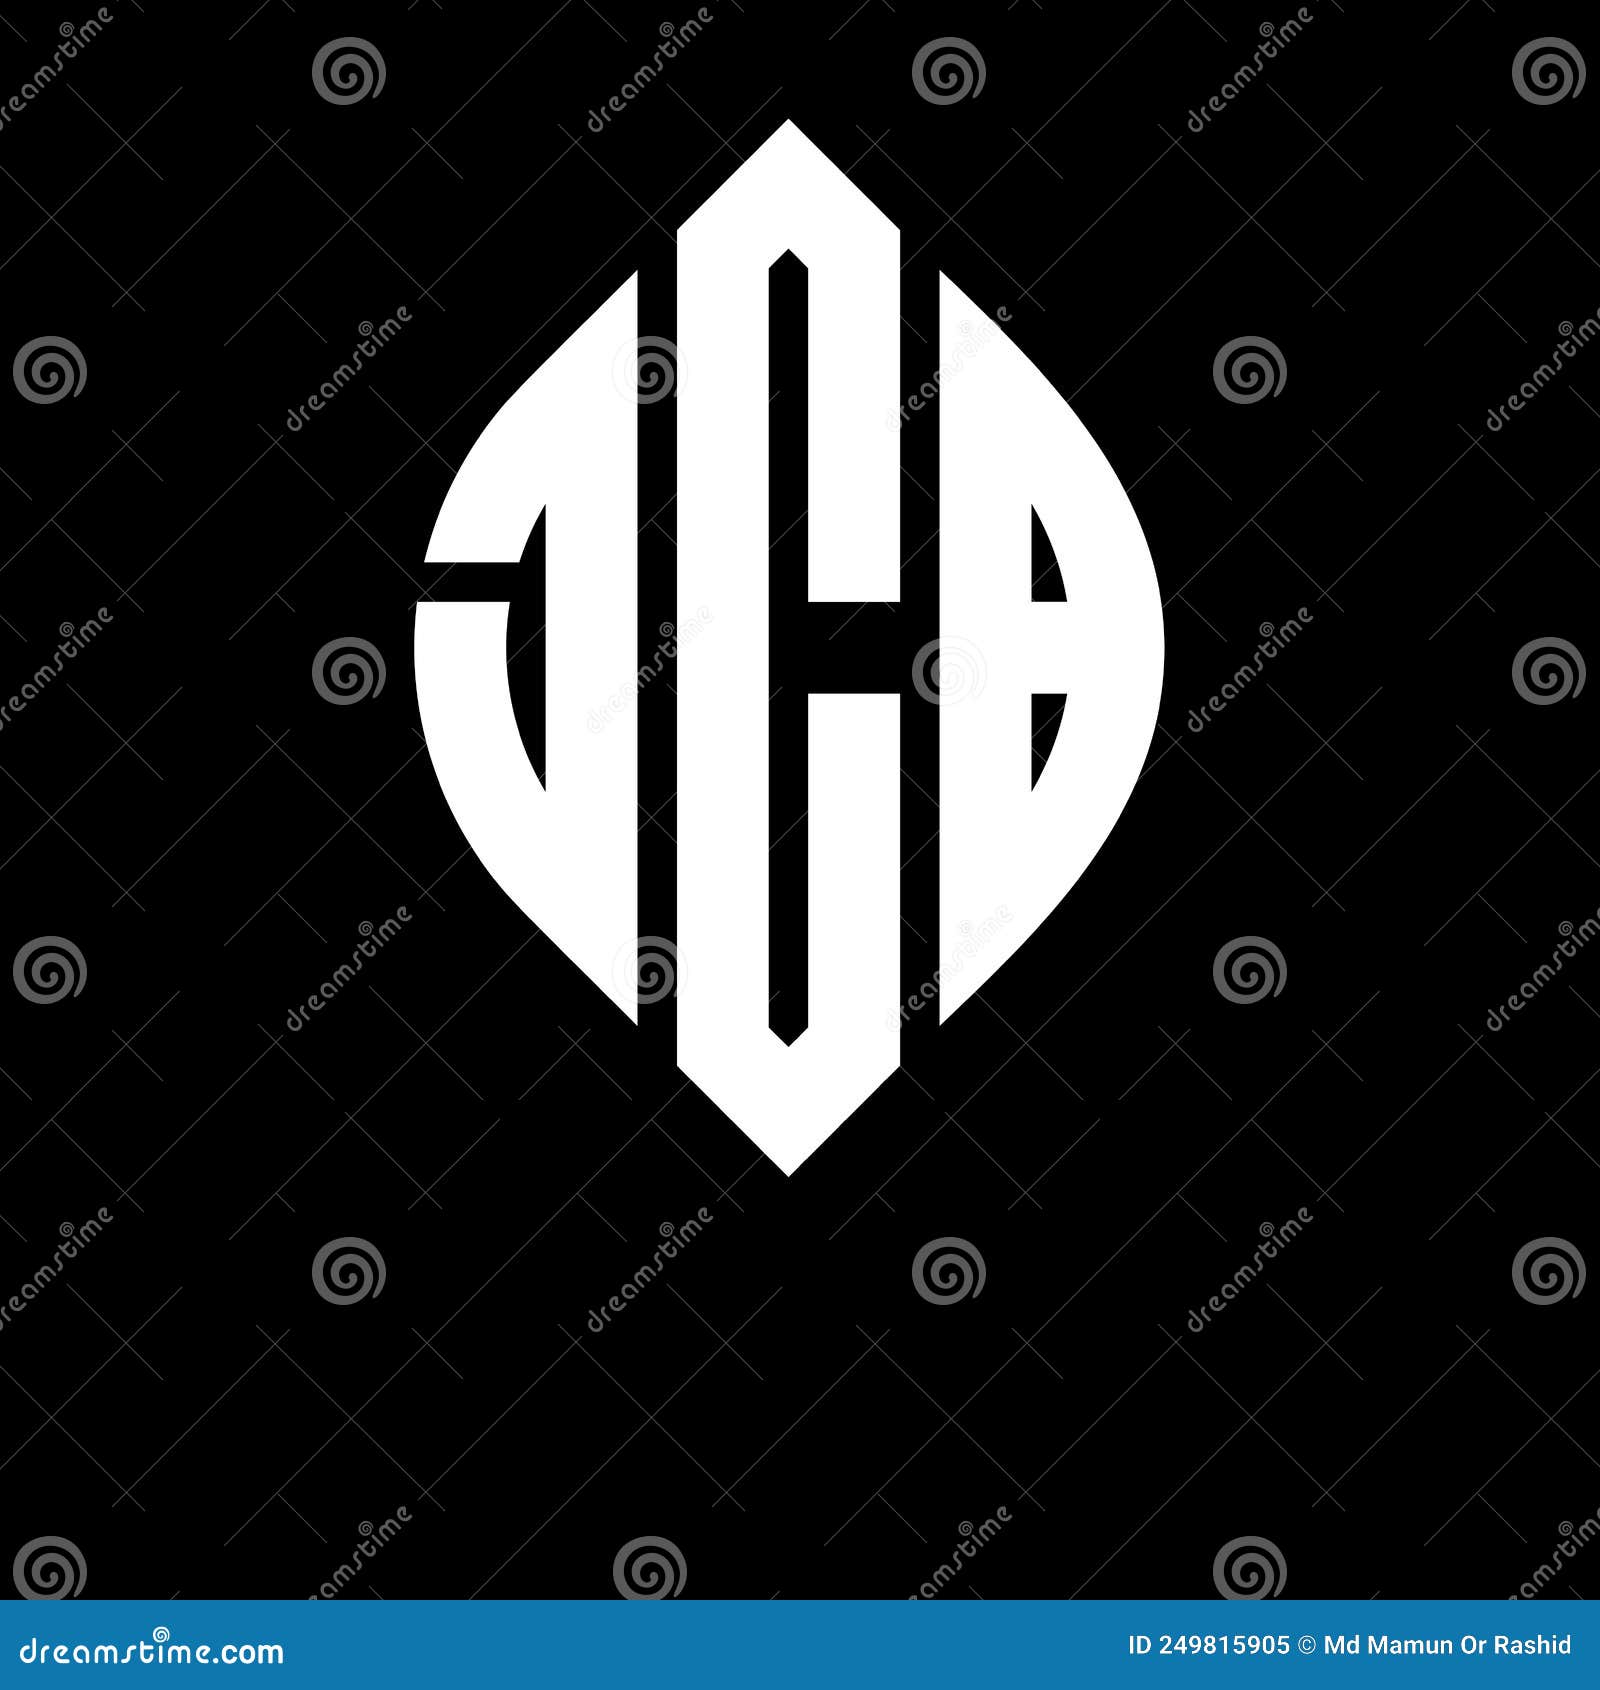 JCB Circle Letter Logo Design with Circle and Ellipse Shape. JCB